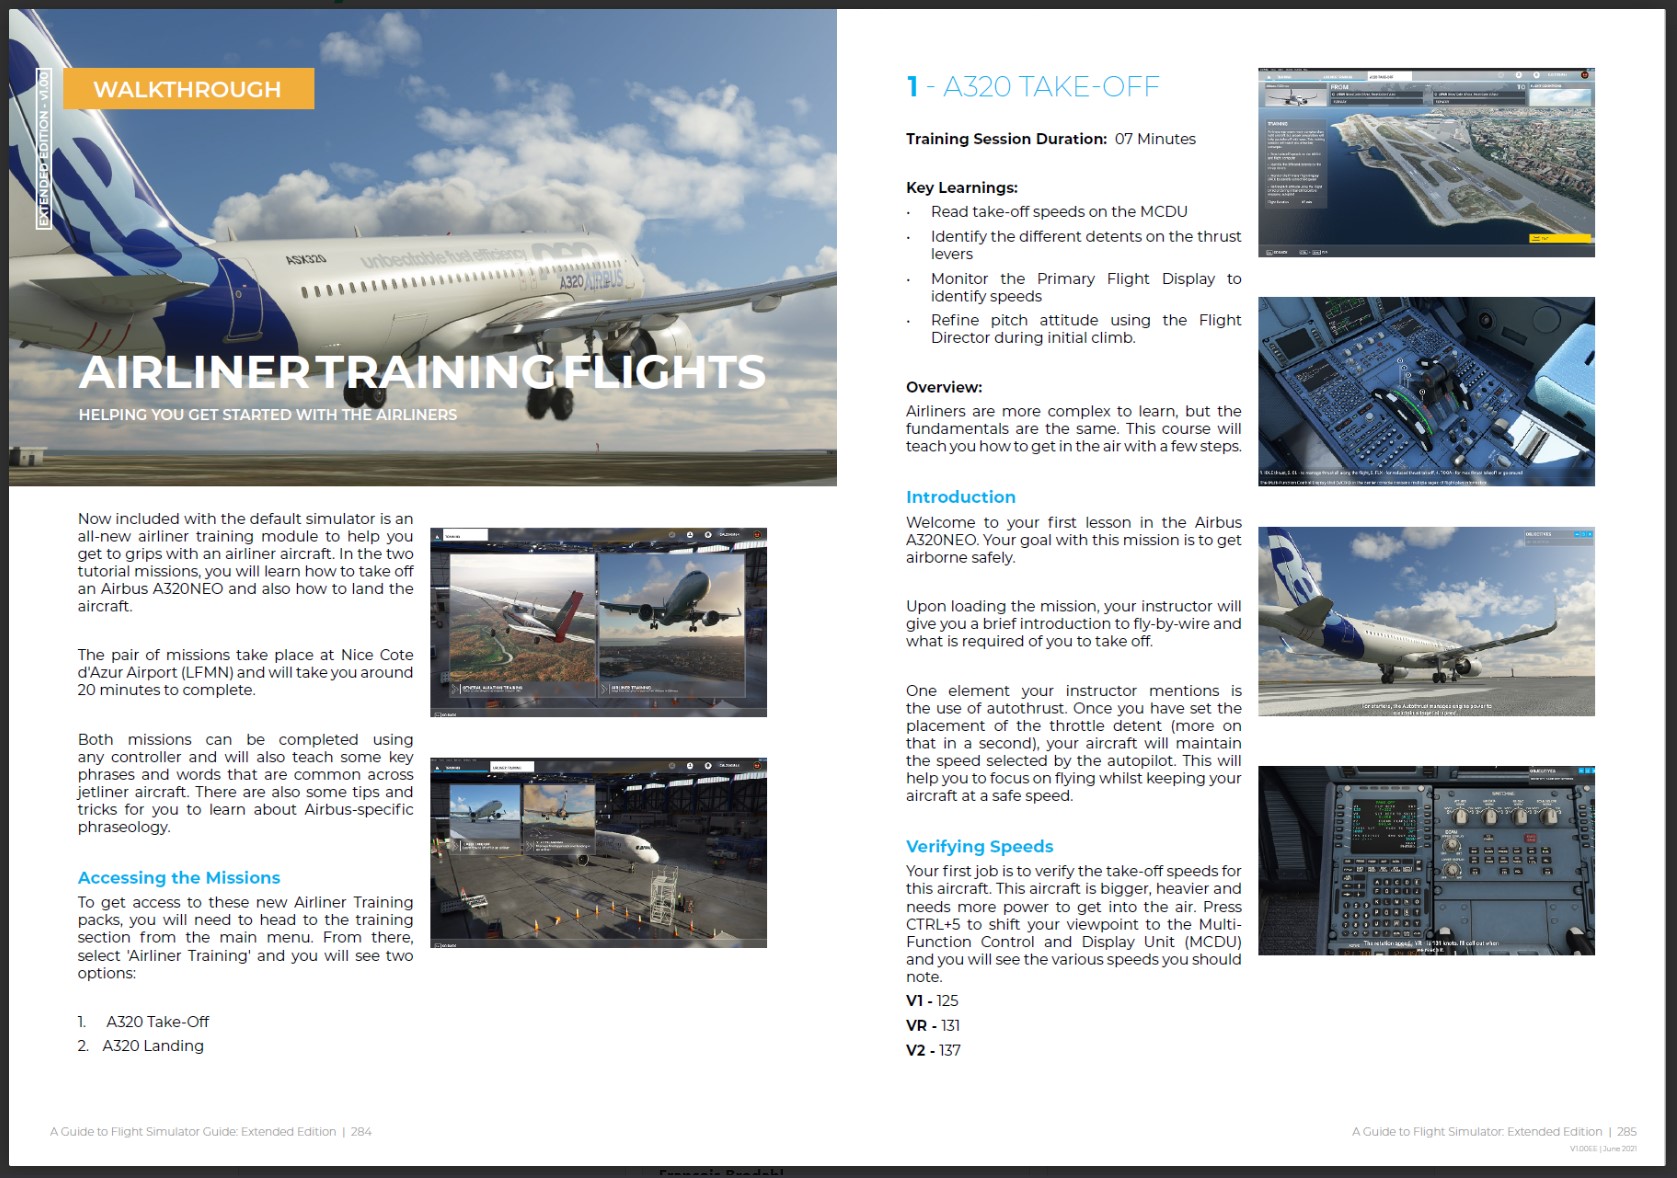 Your guide to Microsoft Flight Simulator 2020